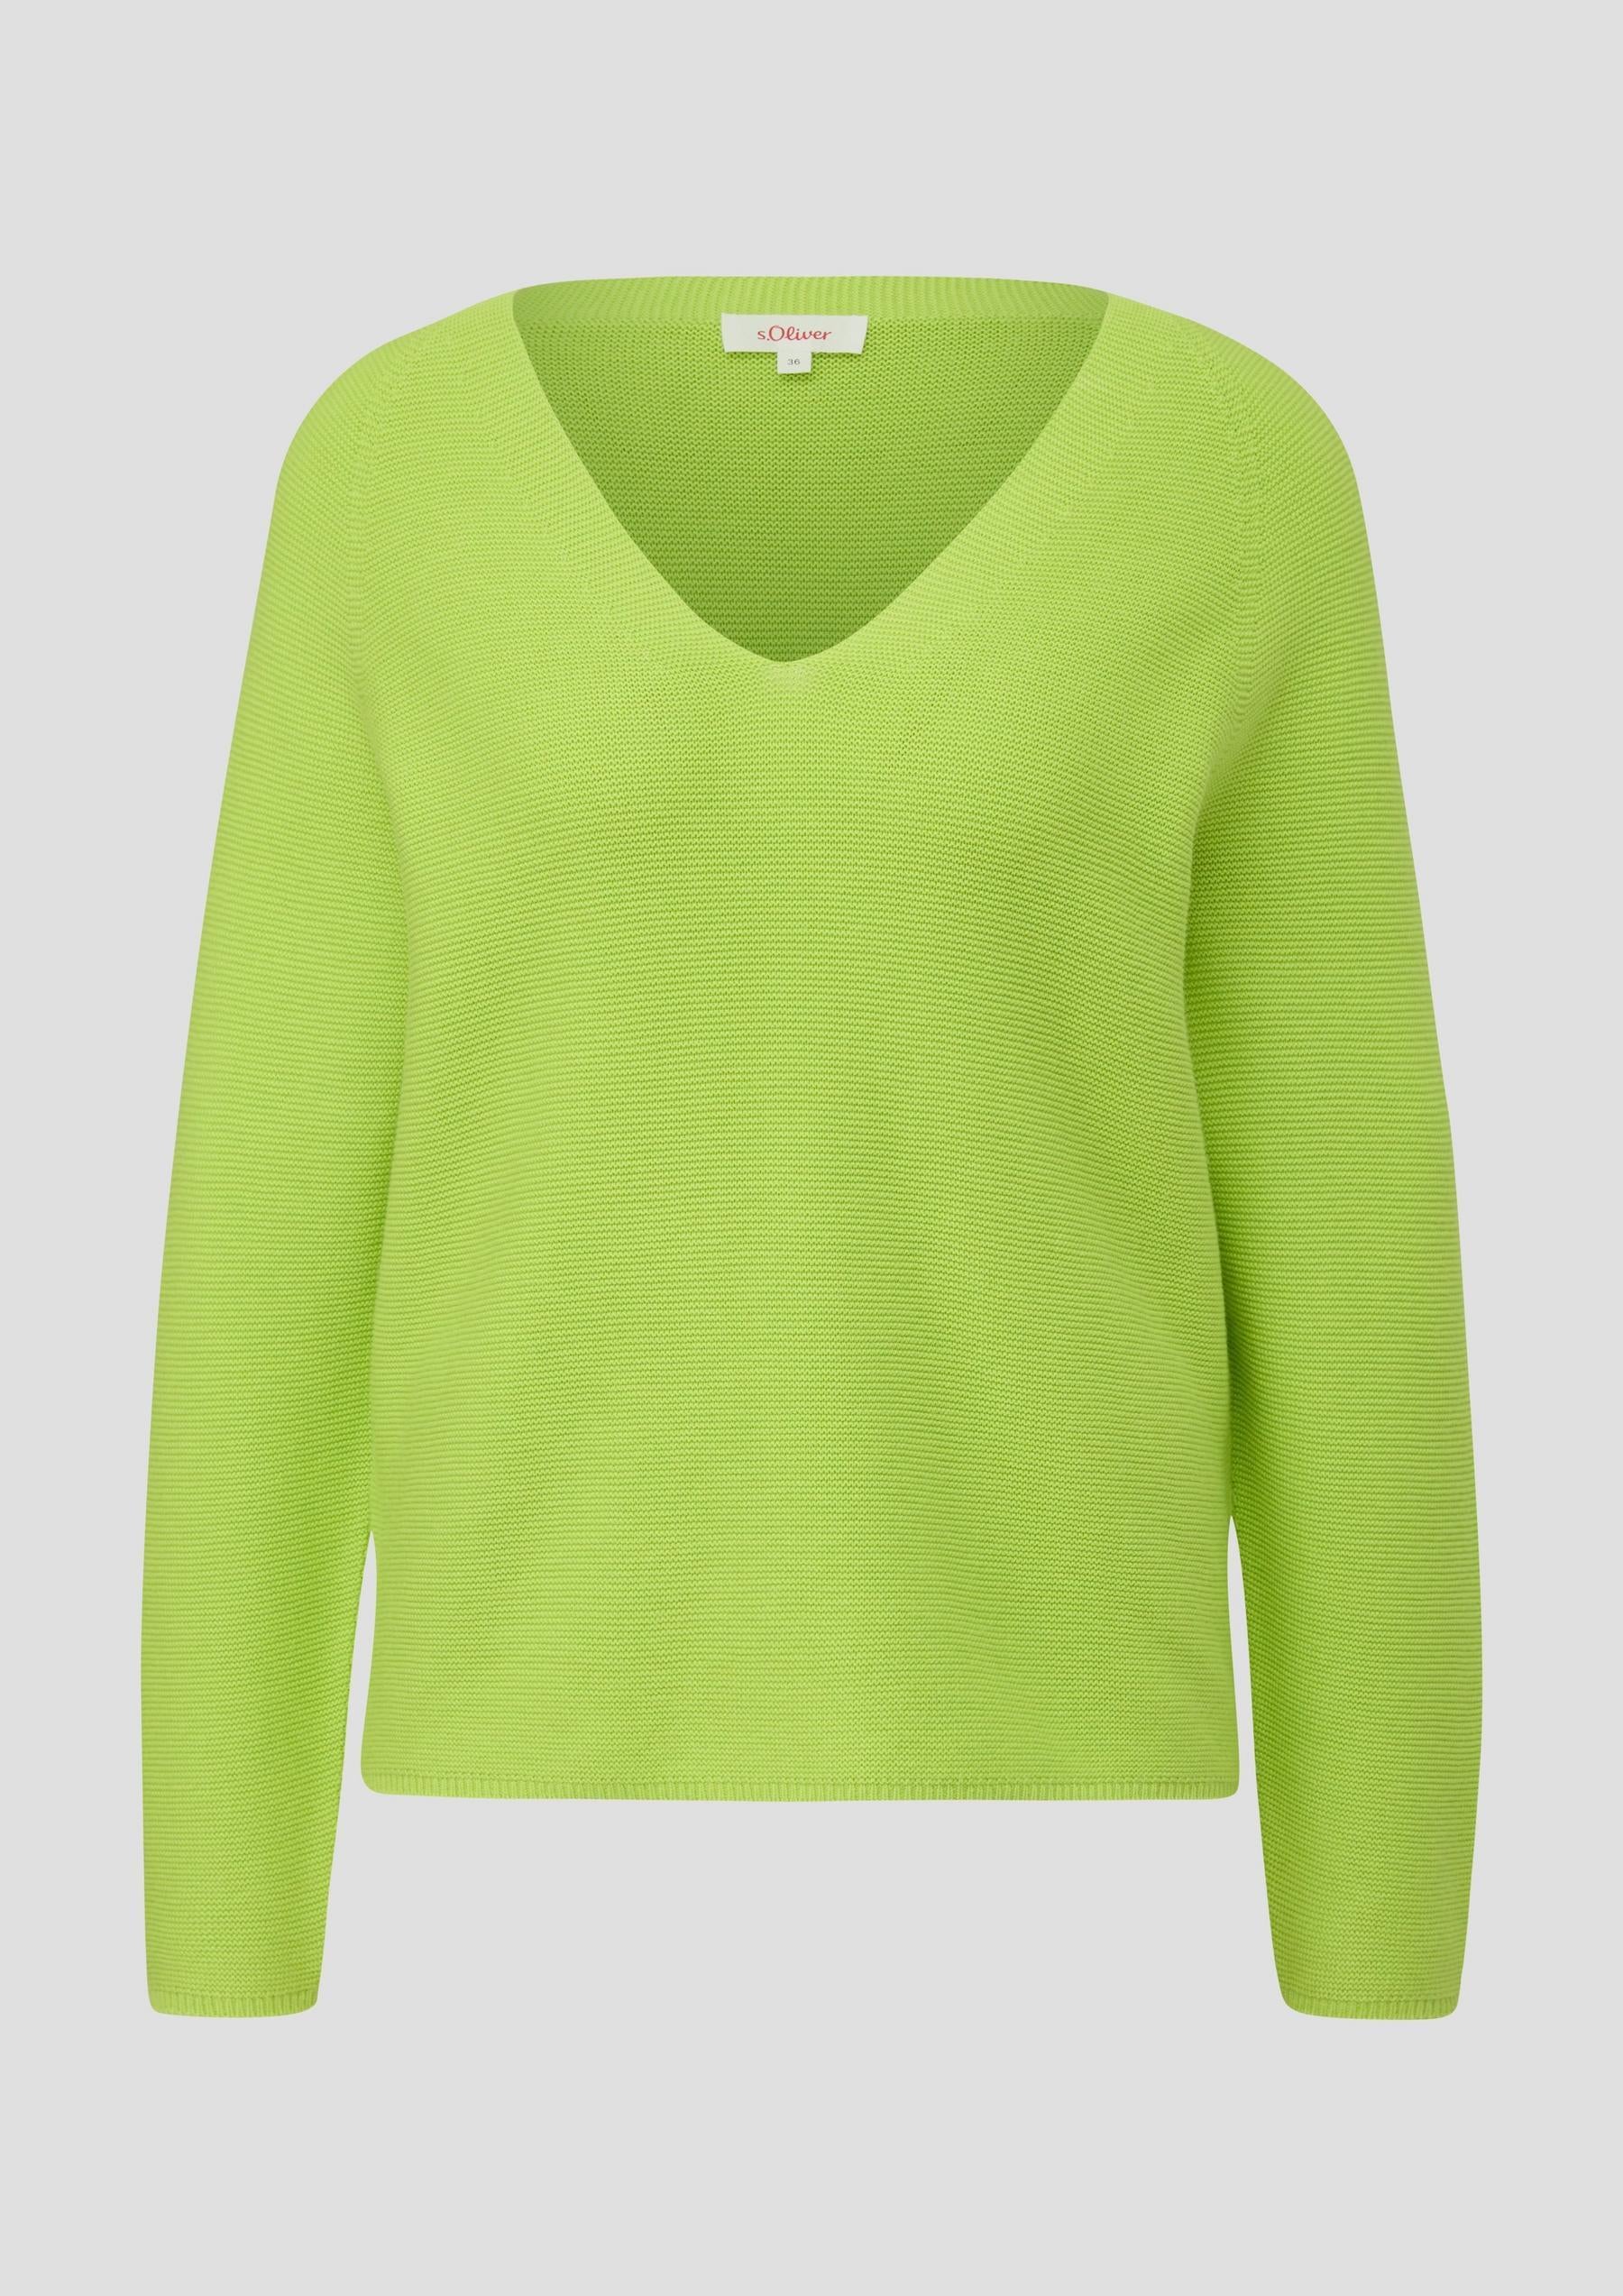 Pullover frischer – Mode s.Oliver Farbe limettengrün Frühling TWISTY - Damen Sommer